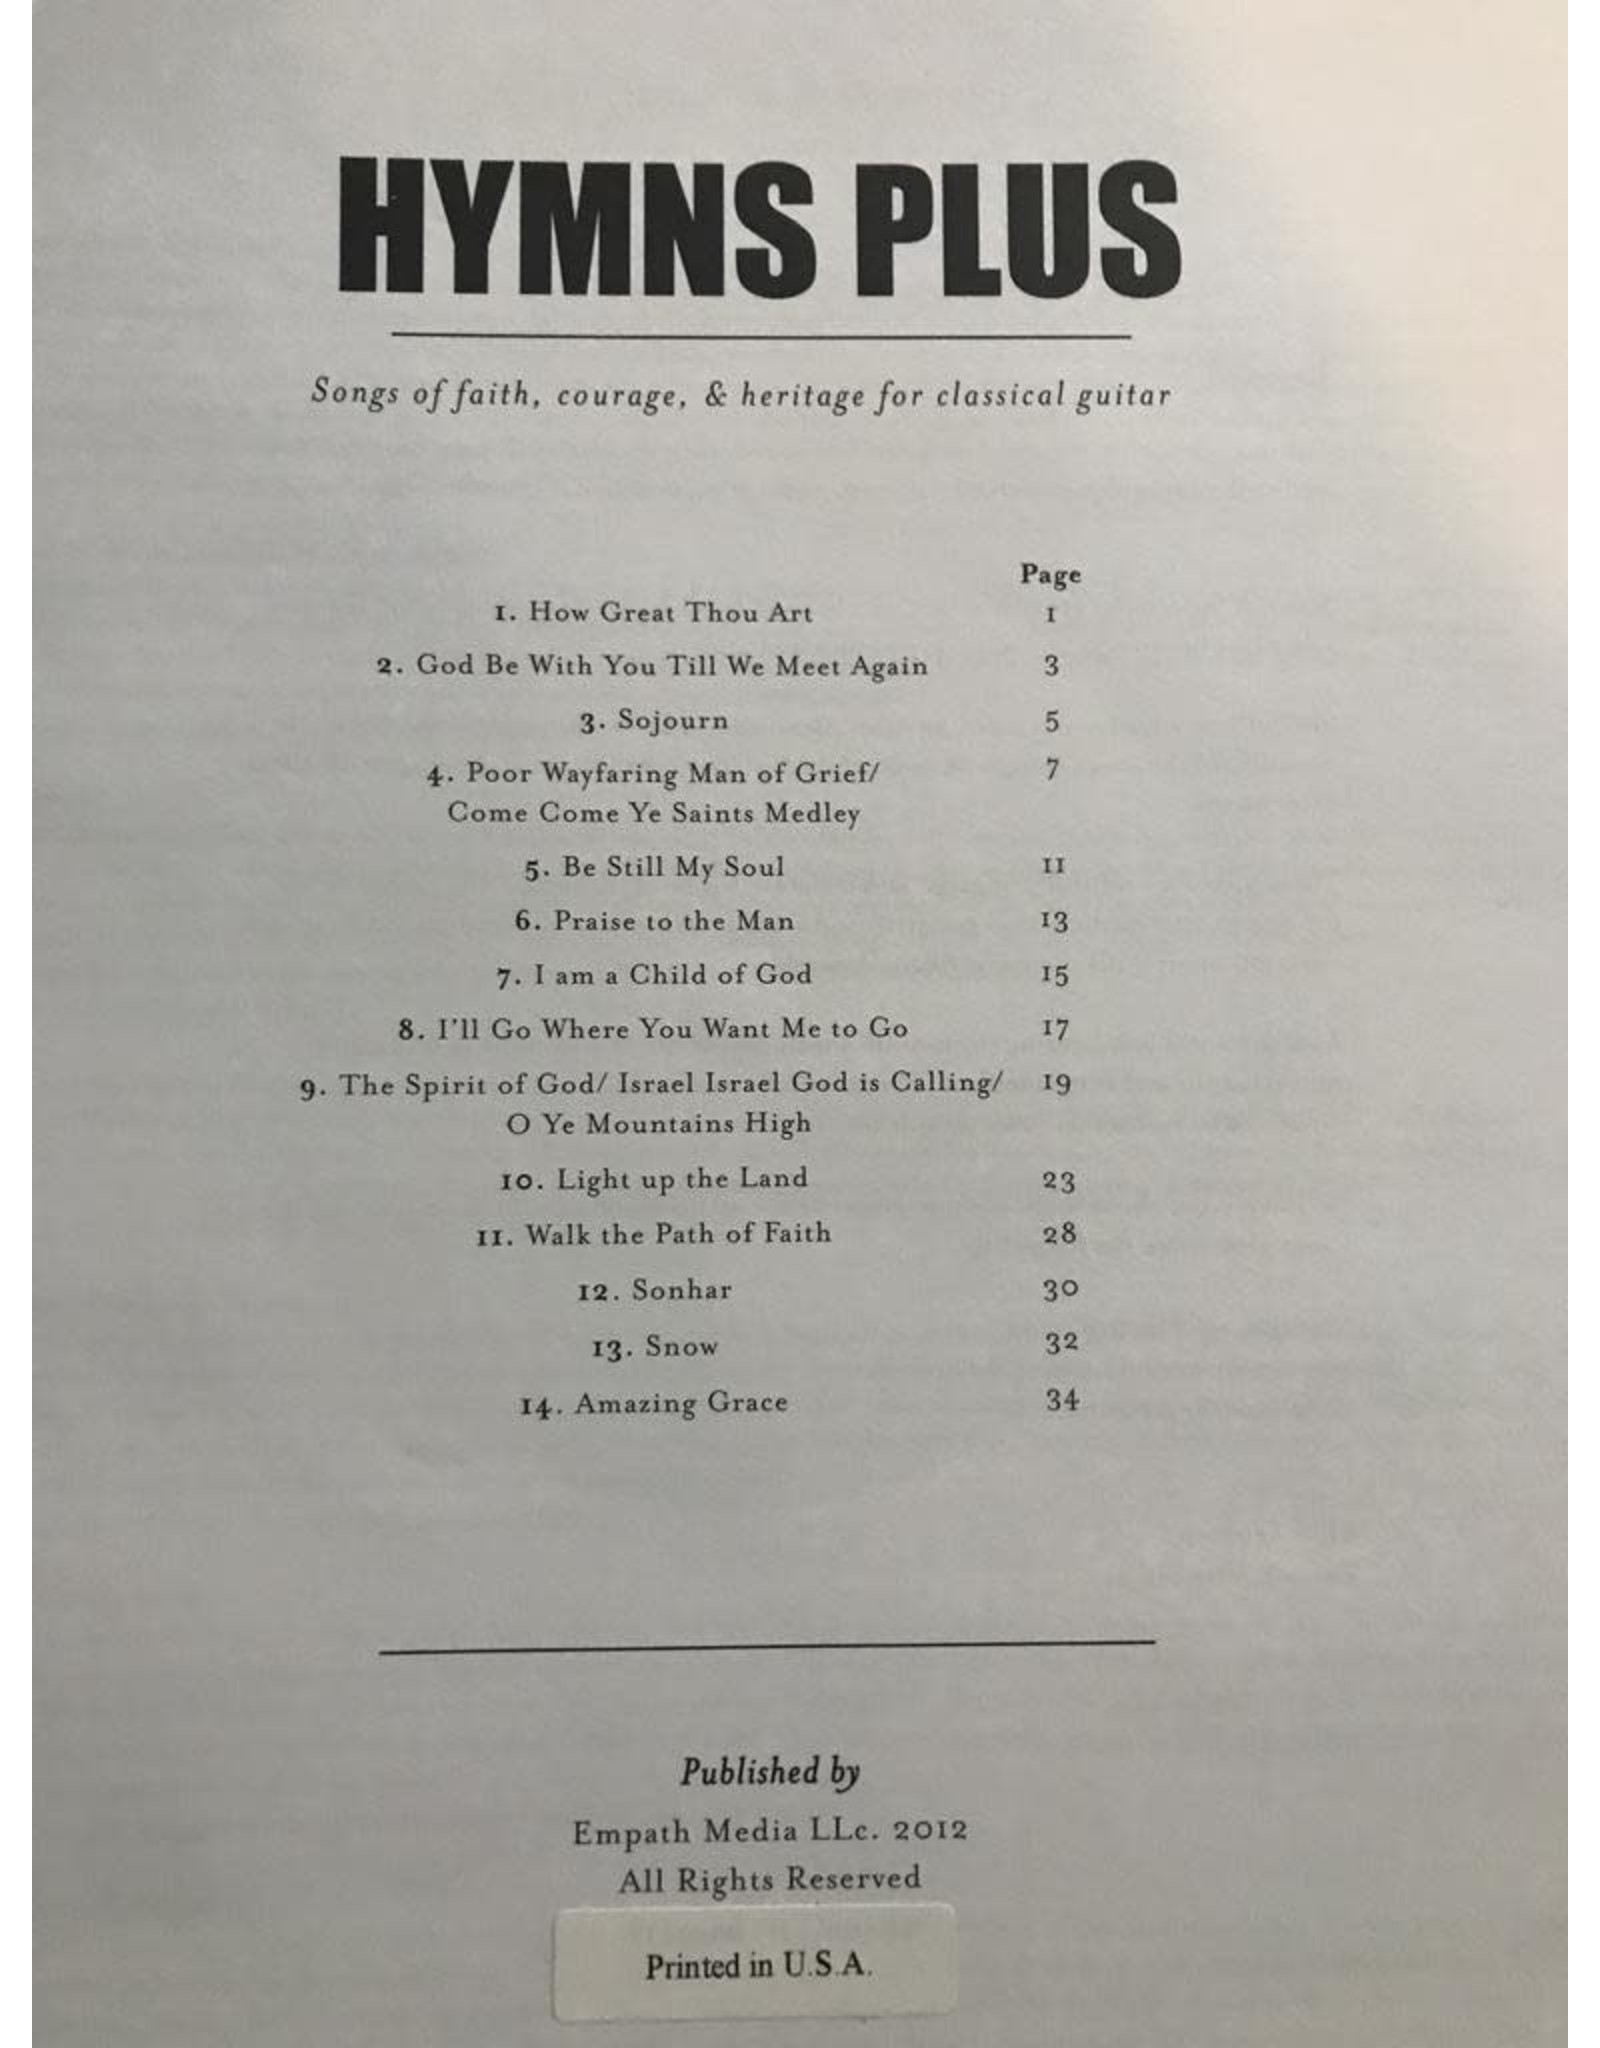 Empath (Mike Erickson) Hymns Plus - Guitar Hymn Book by Allan Alexander and Mike Ericksen